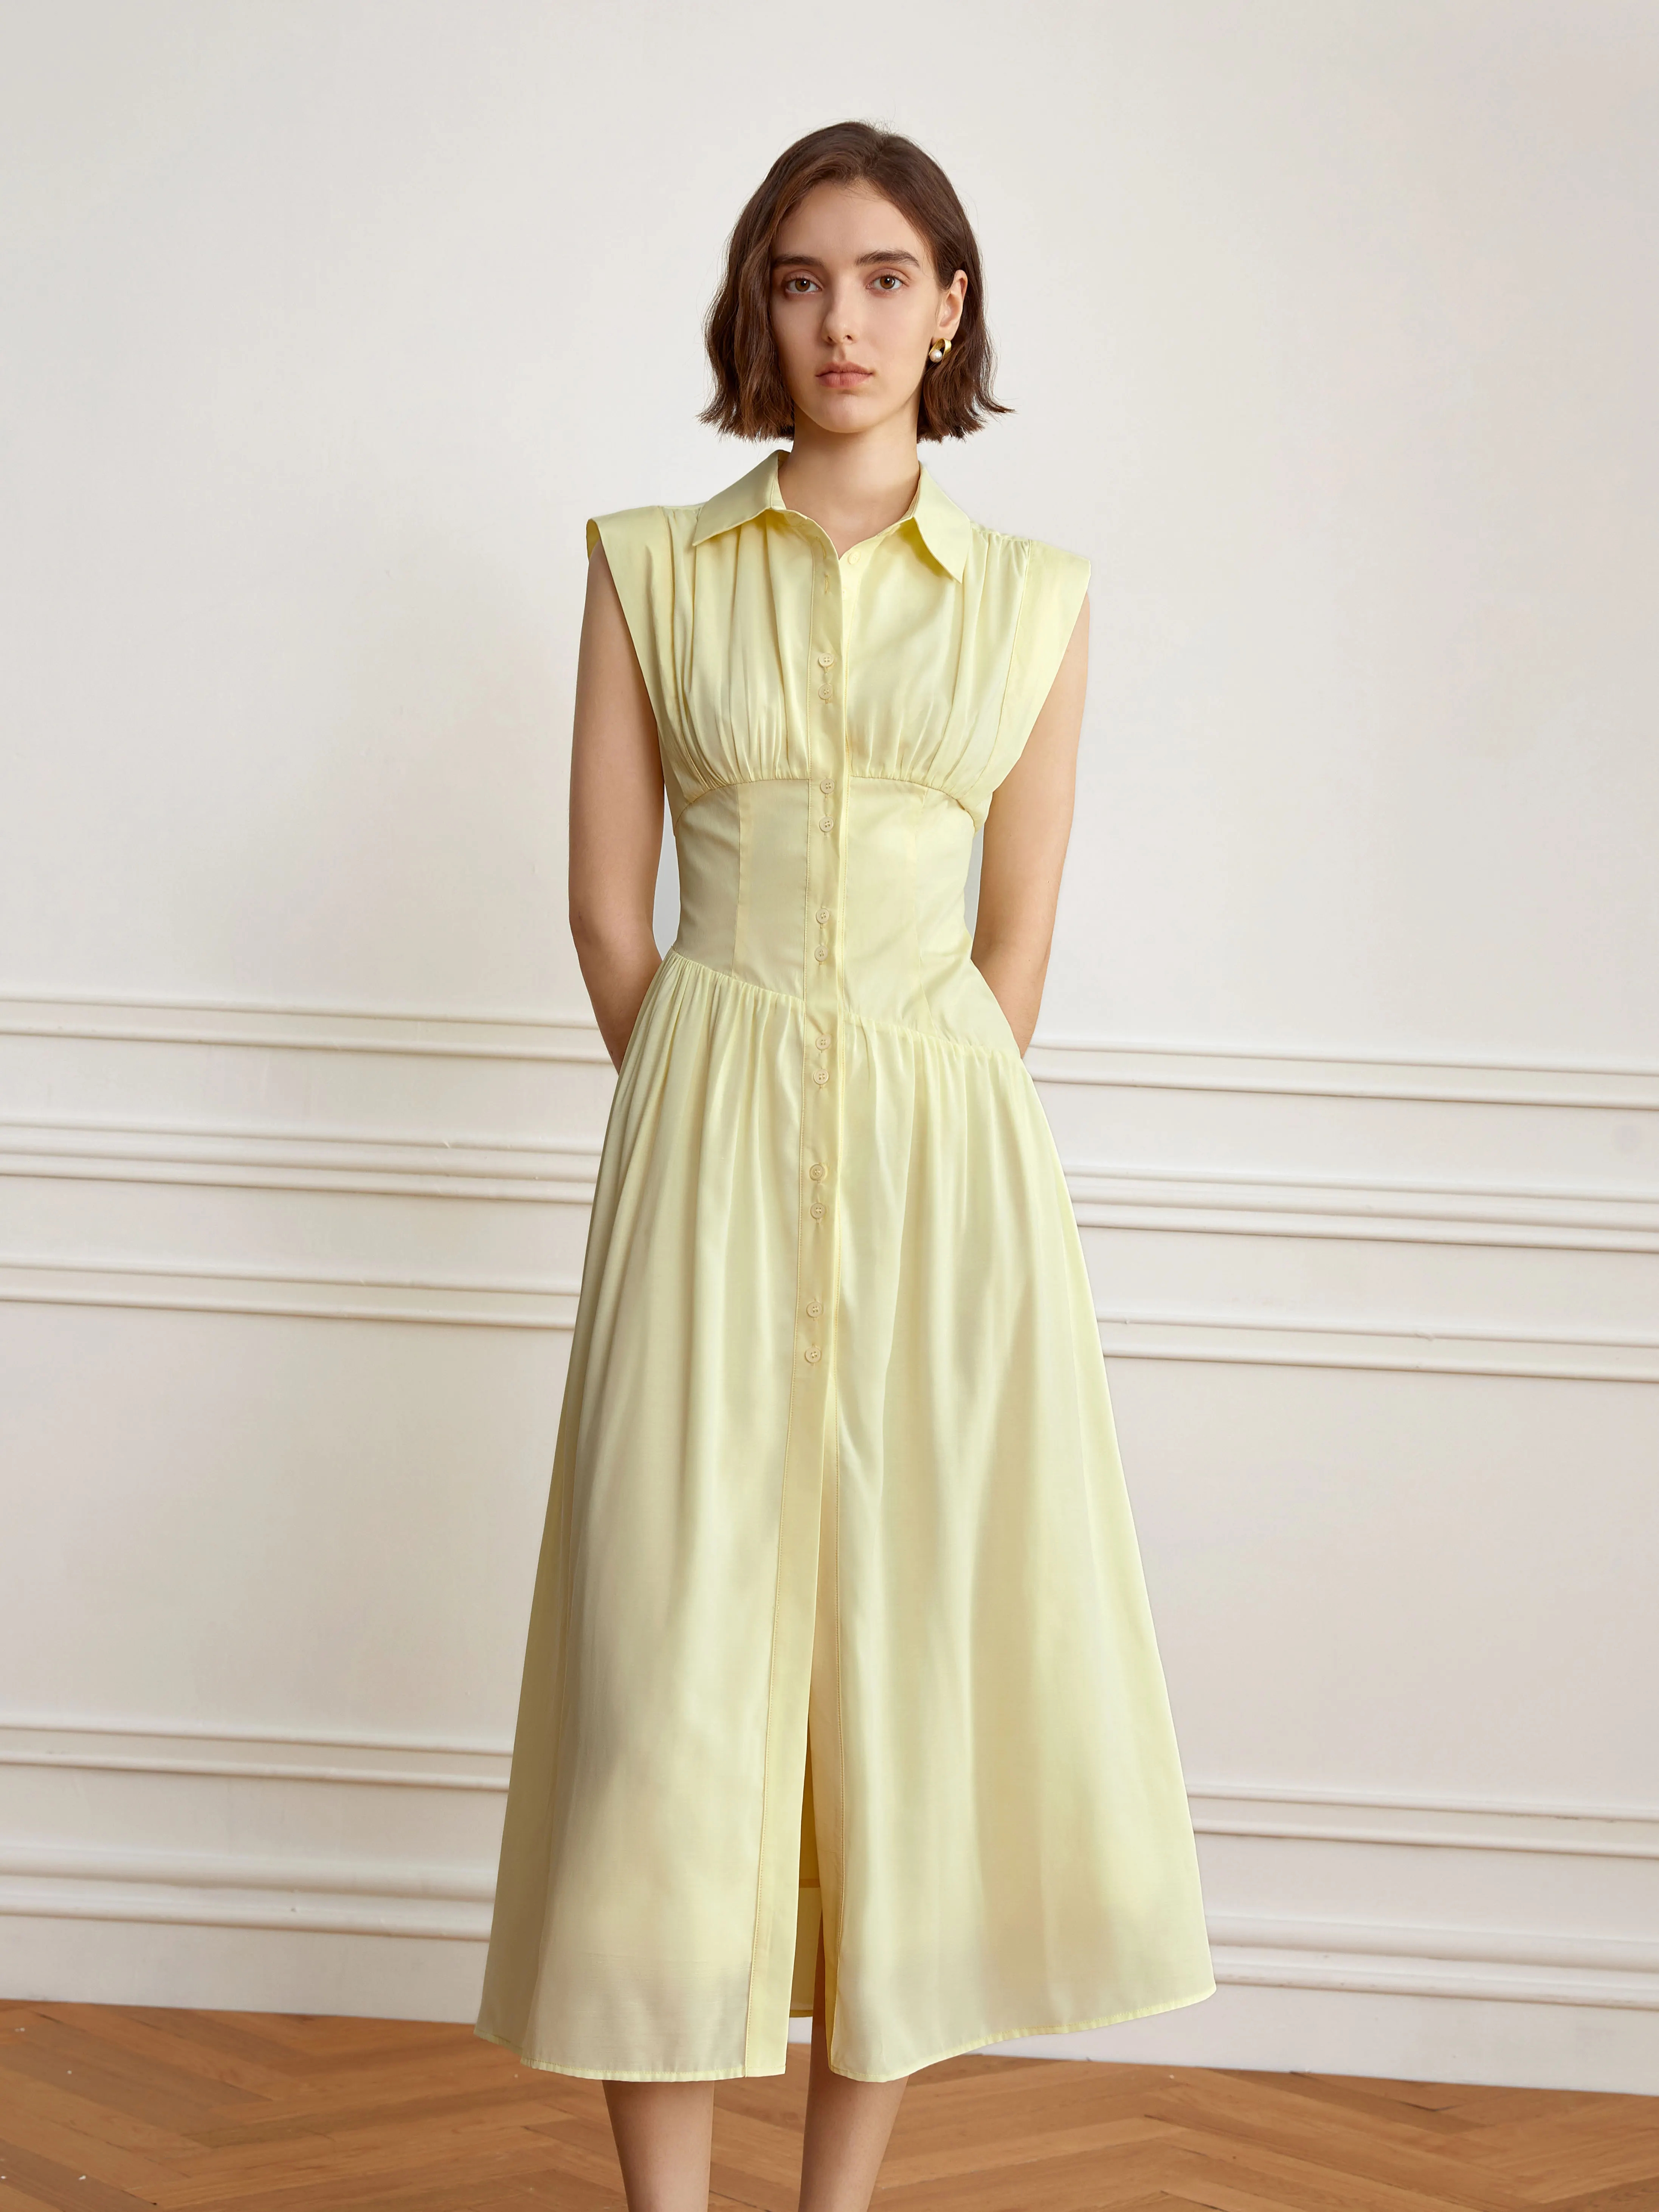 Dress Design For Woman (9)